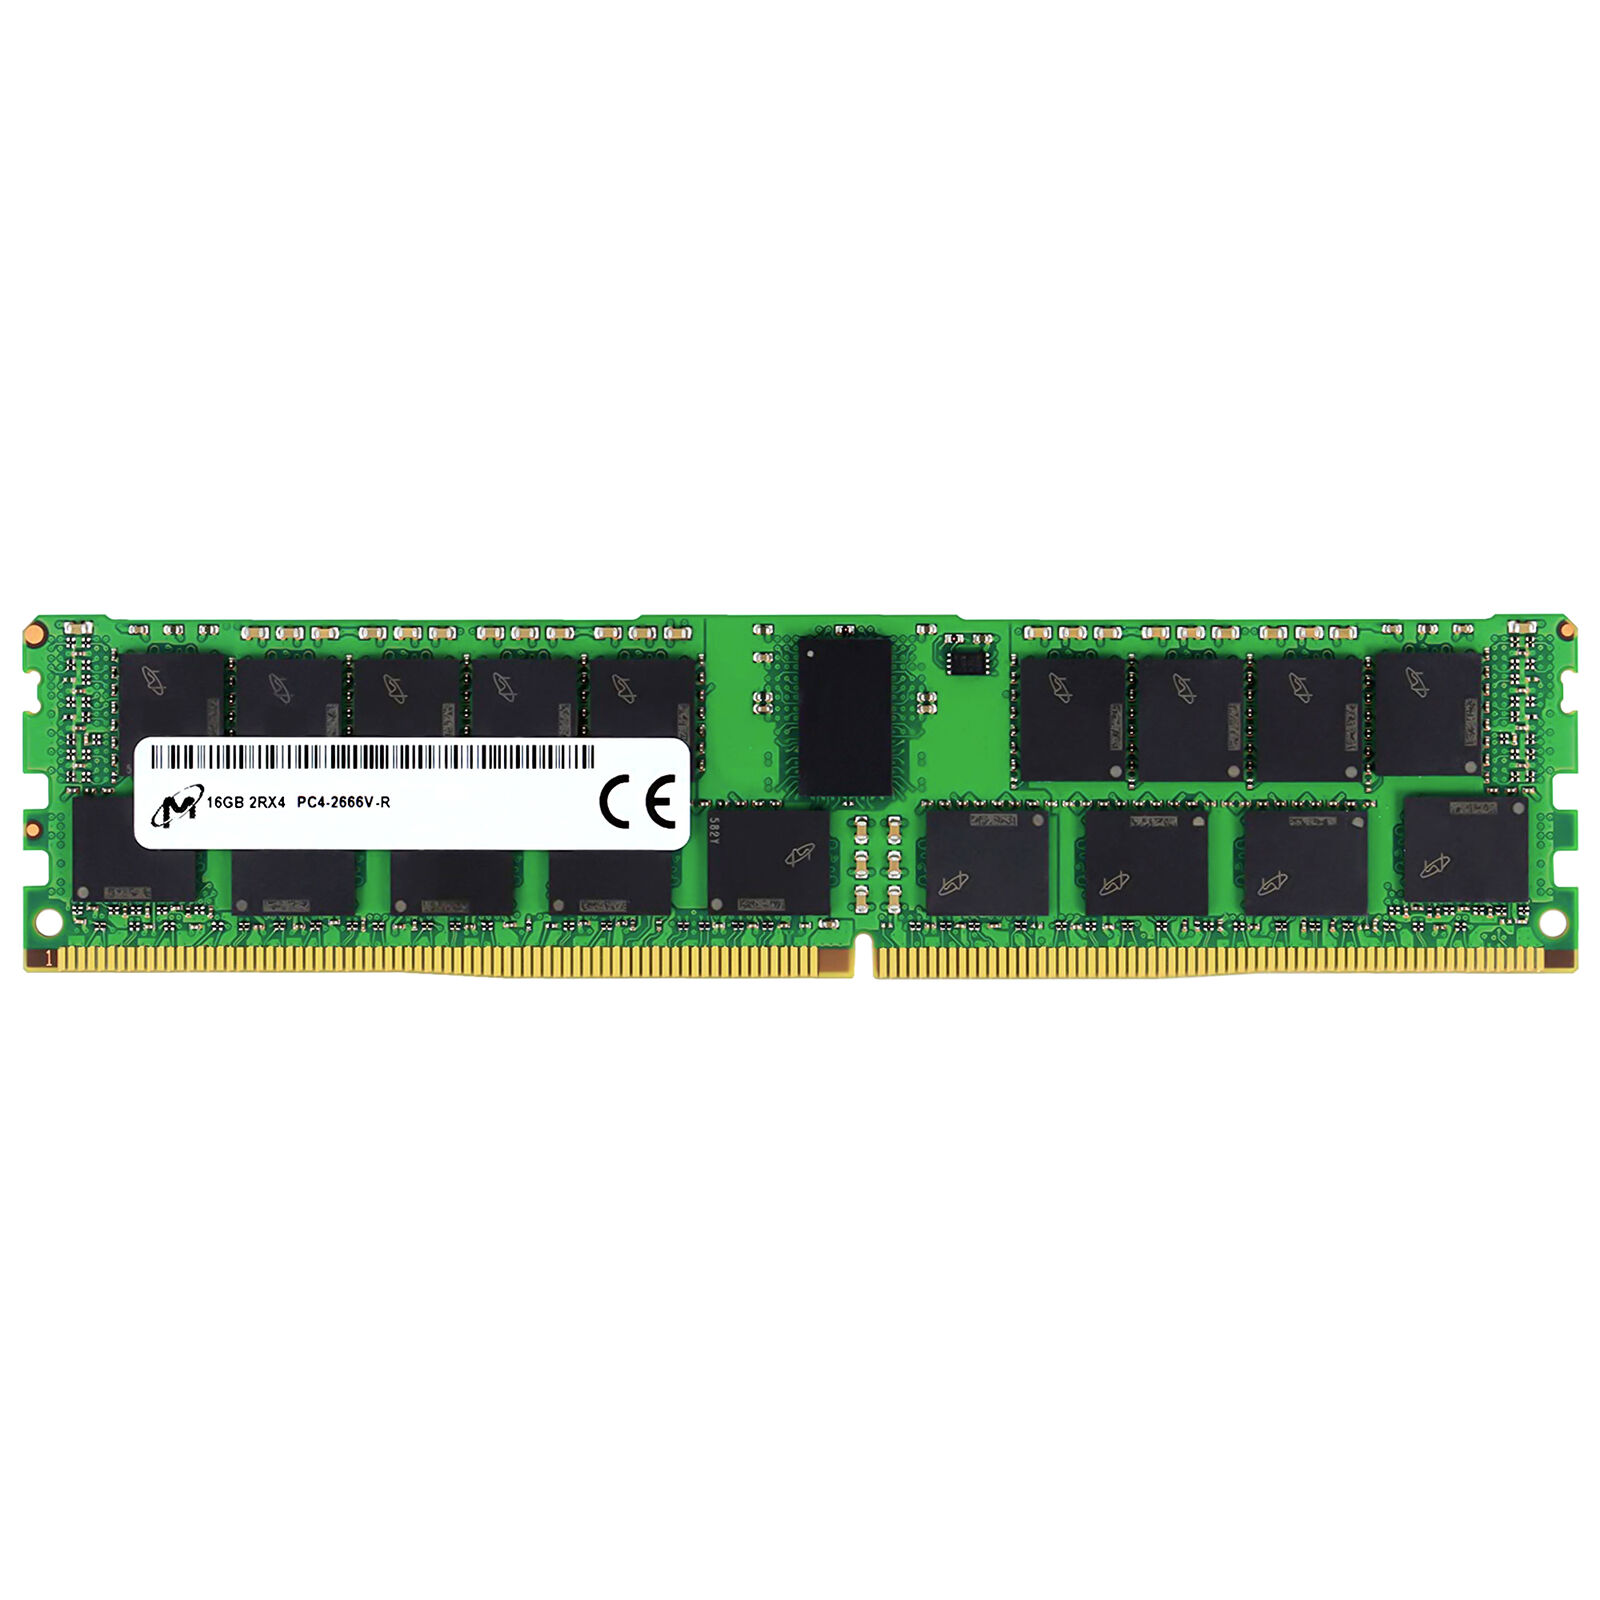 Micron 16GB 2Rx4 PC4-2666V RDIMM DDR4-21300 ECC REG Registered Server Memory RAM